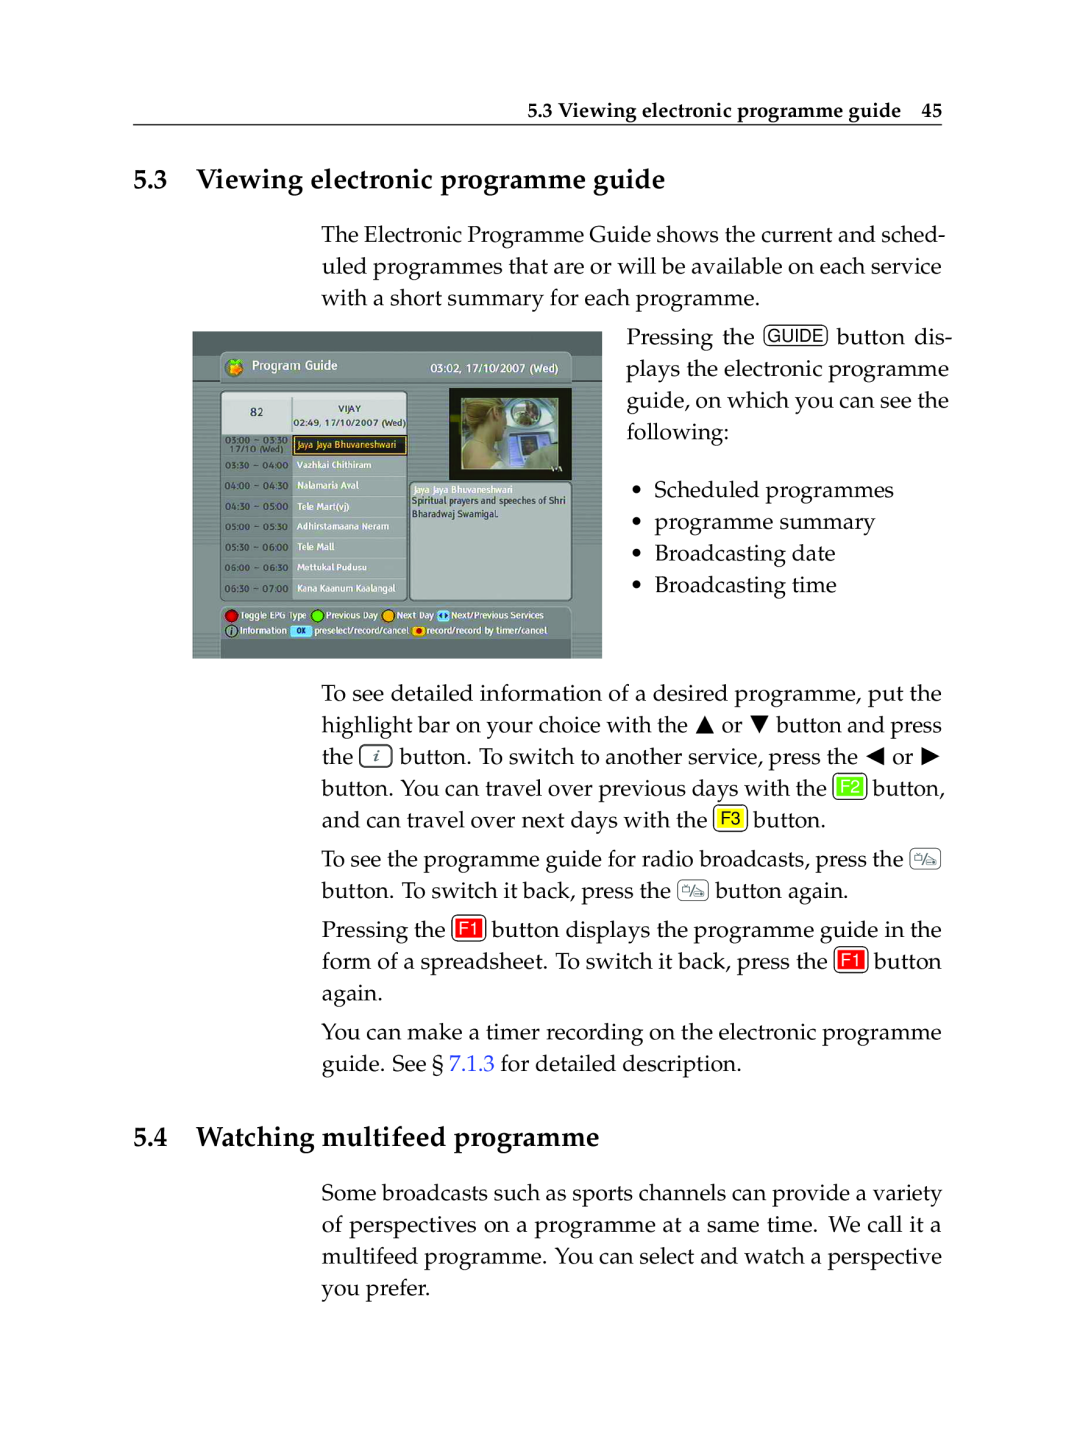 Topfield TF 7700 HD PVR, TF 7710 HD PVR manual Viewing electronic programme guide, Watching multifeed programme 